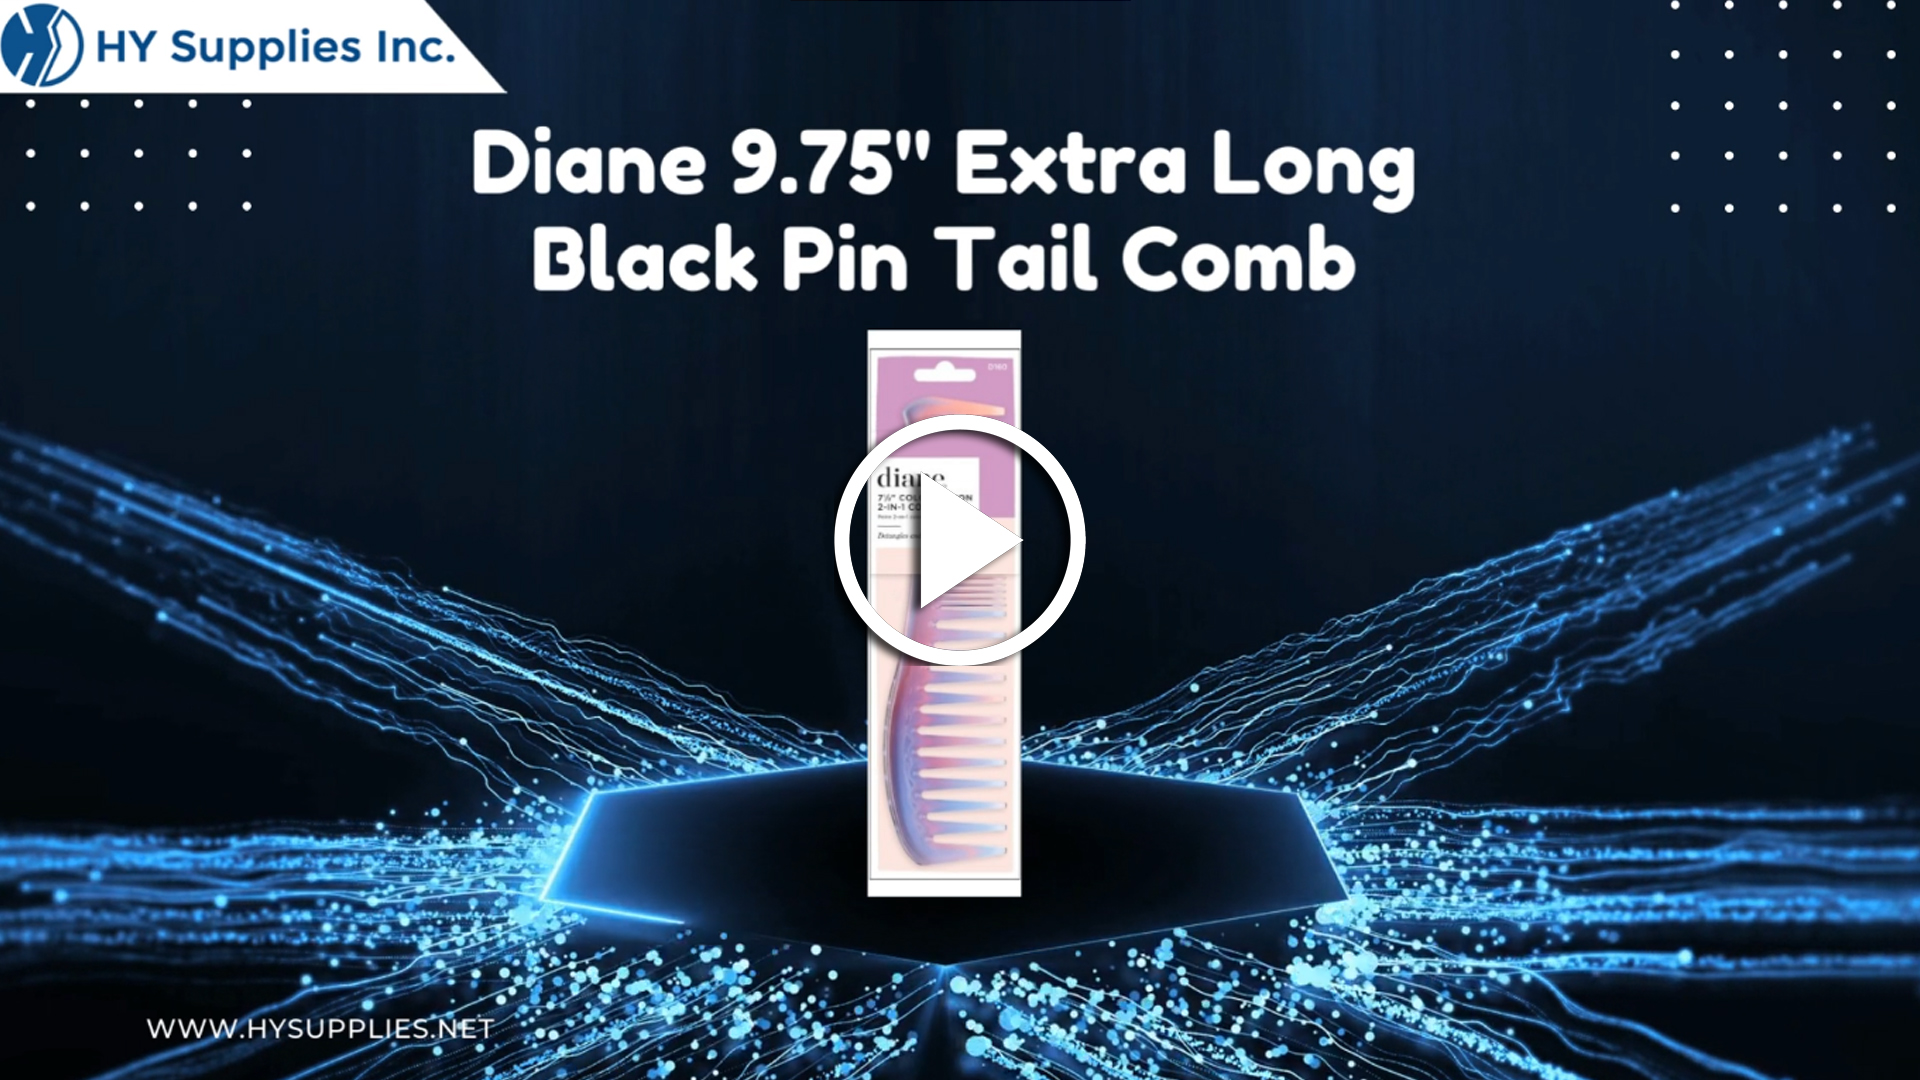 Diane 9.75" Extra Long Black Pin Tail Comb